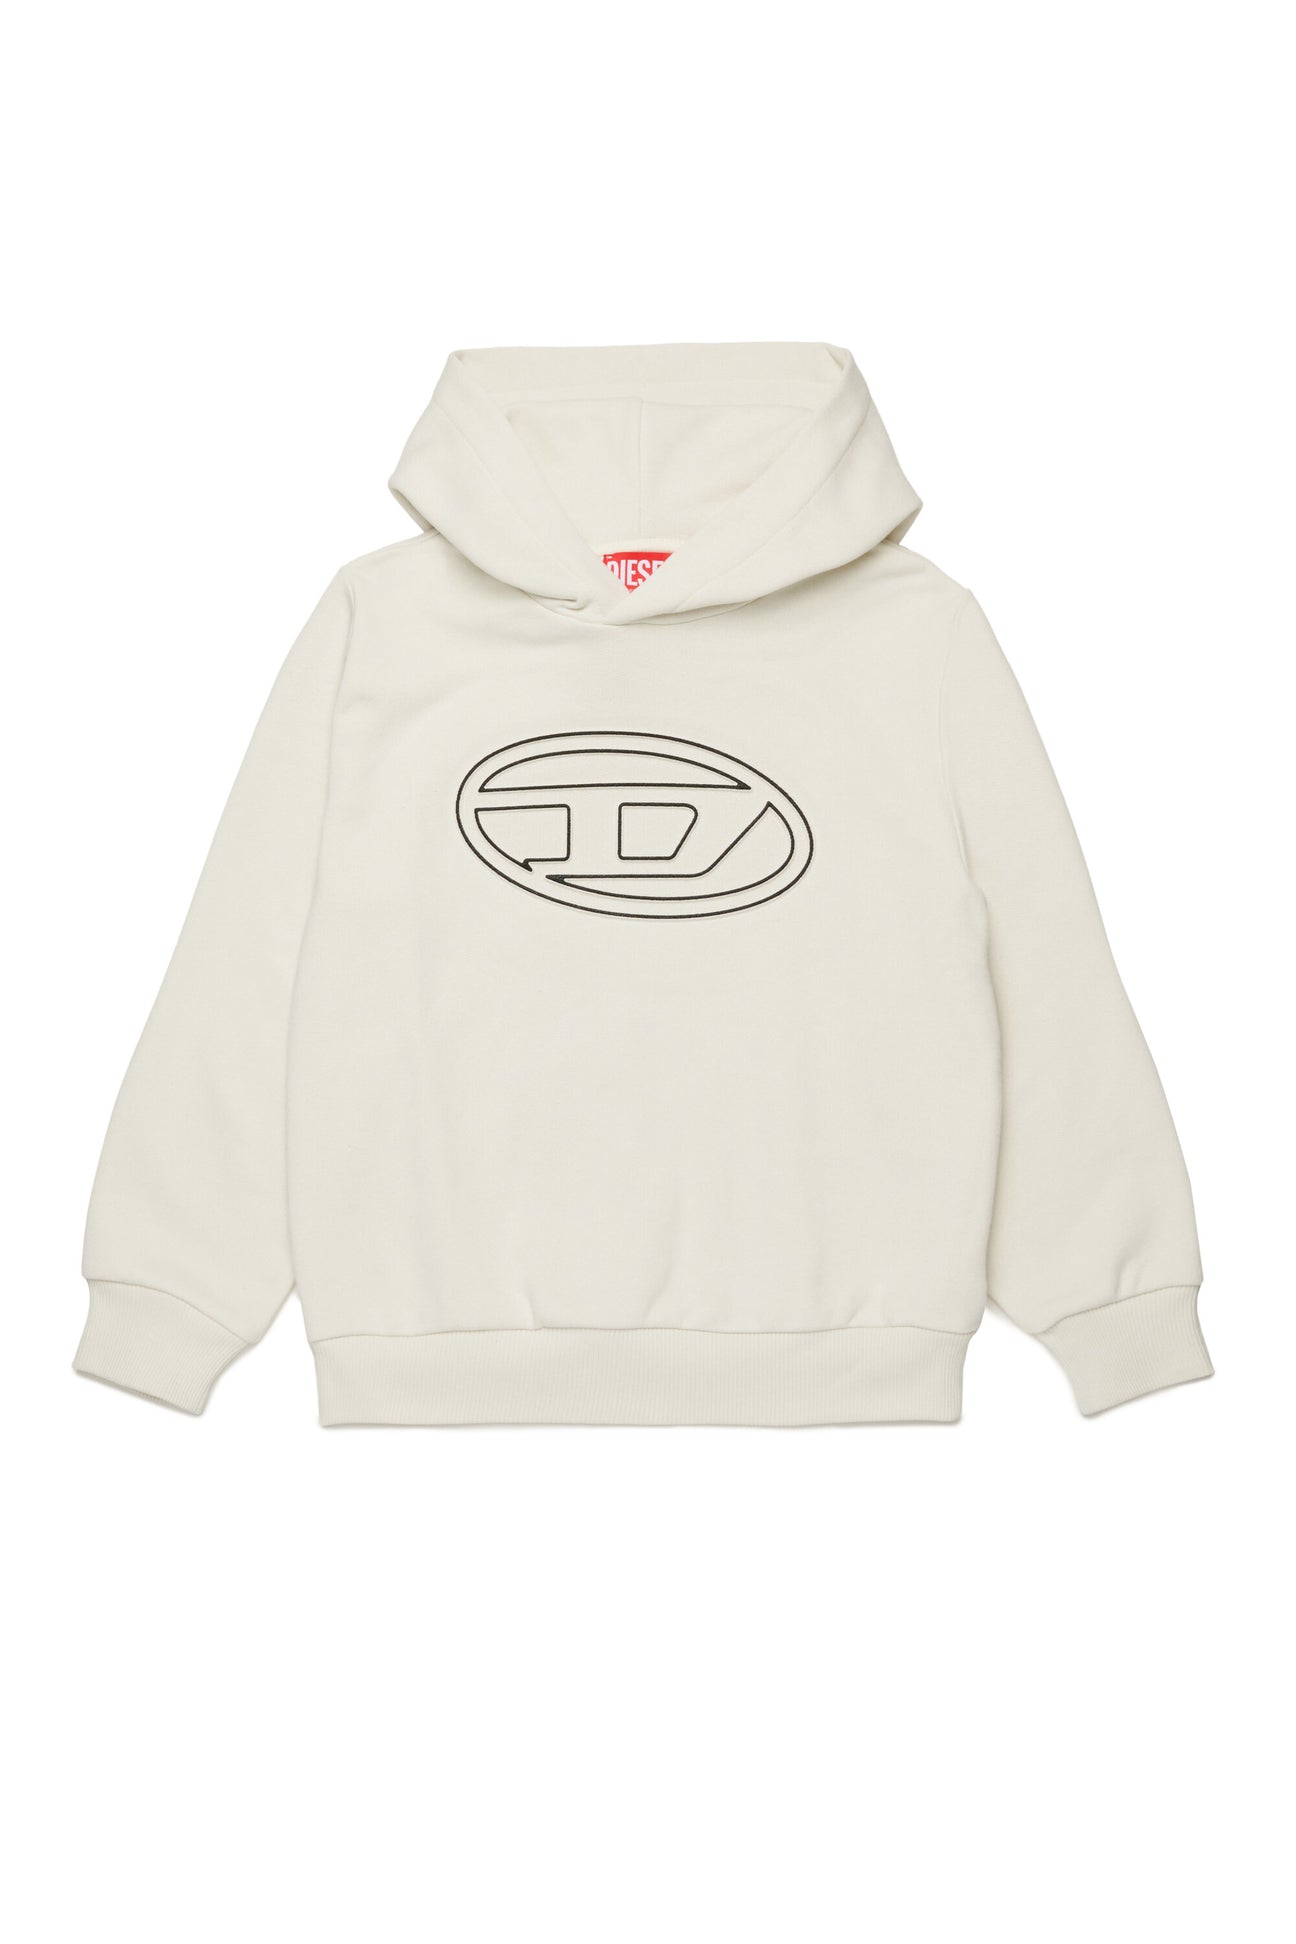 Oval D branded hooded sweatshirt 